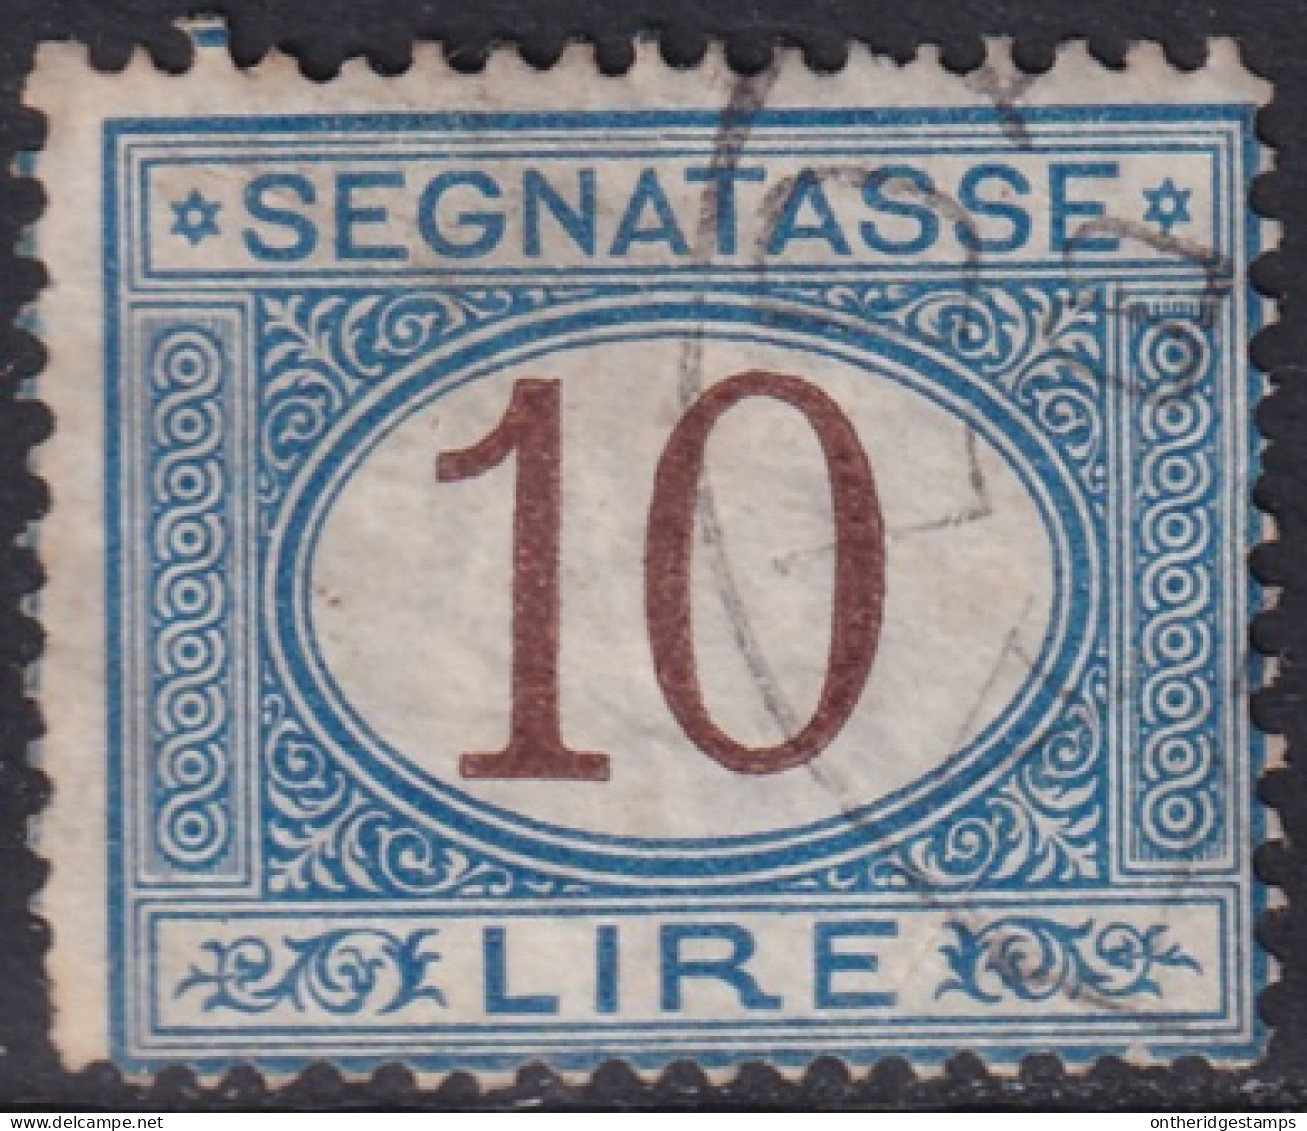 Italy 1874 Sc J19 Italia Sa S14 Postage Due Used Creases - Segnatasse